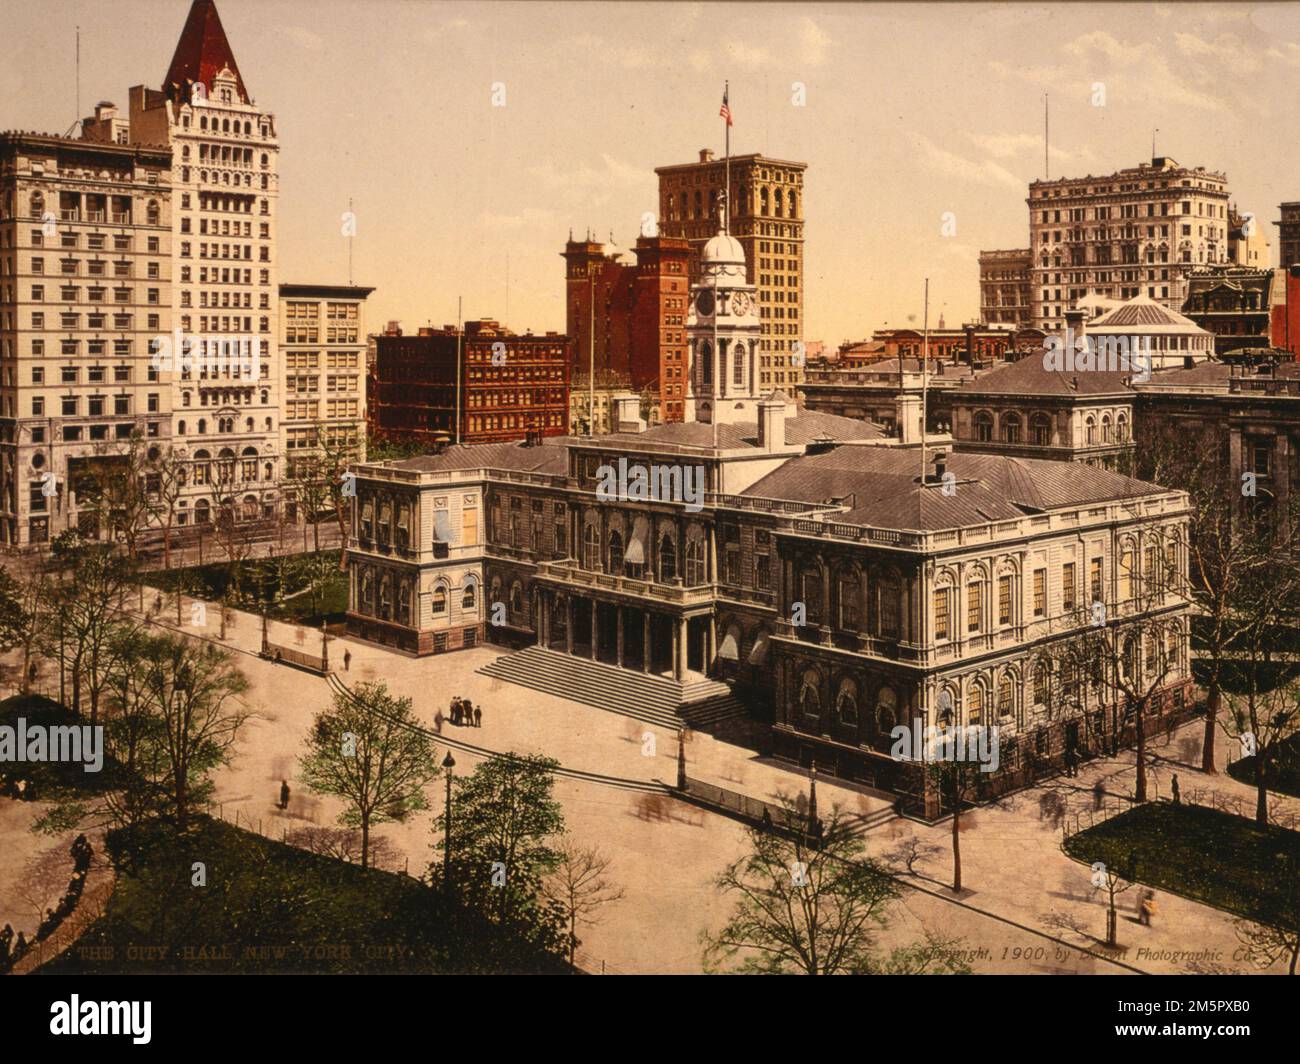 The City Hall, New York City, USA, c 1900 - Detroit Publishing Co - Photochrom print Stock Photo